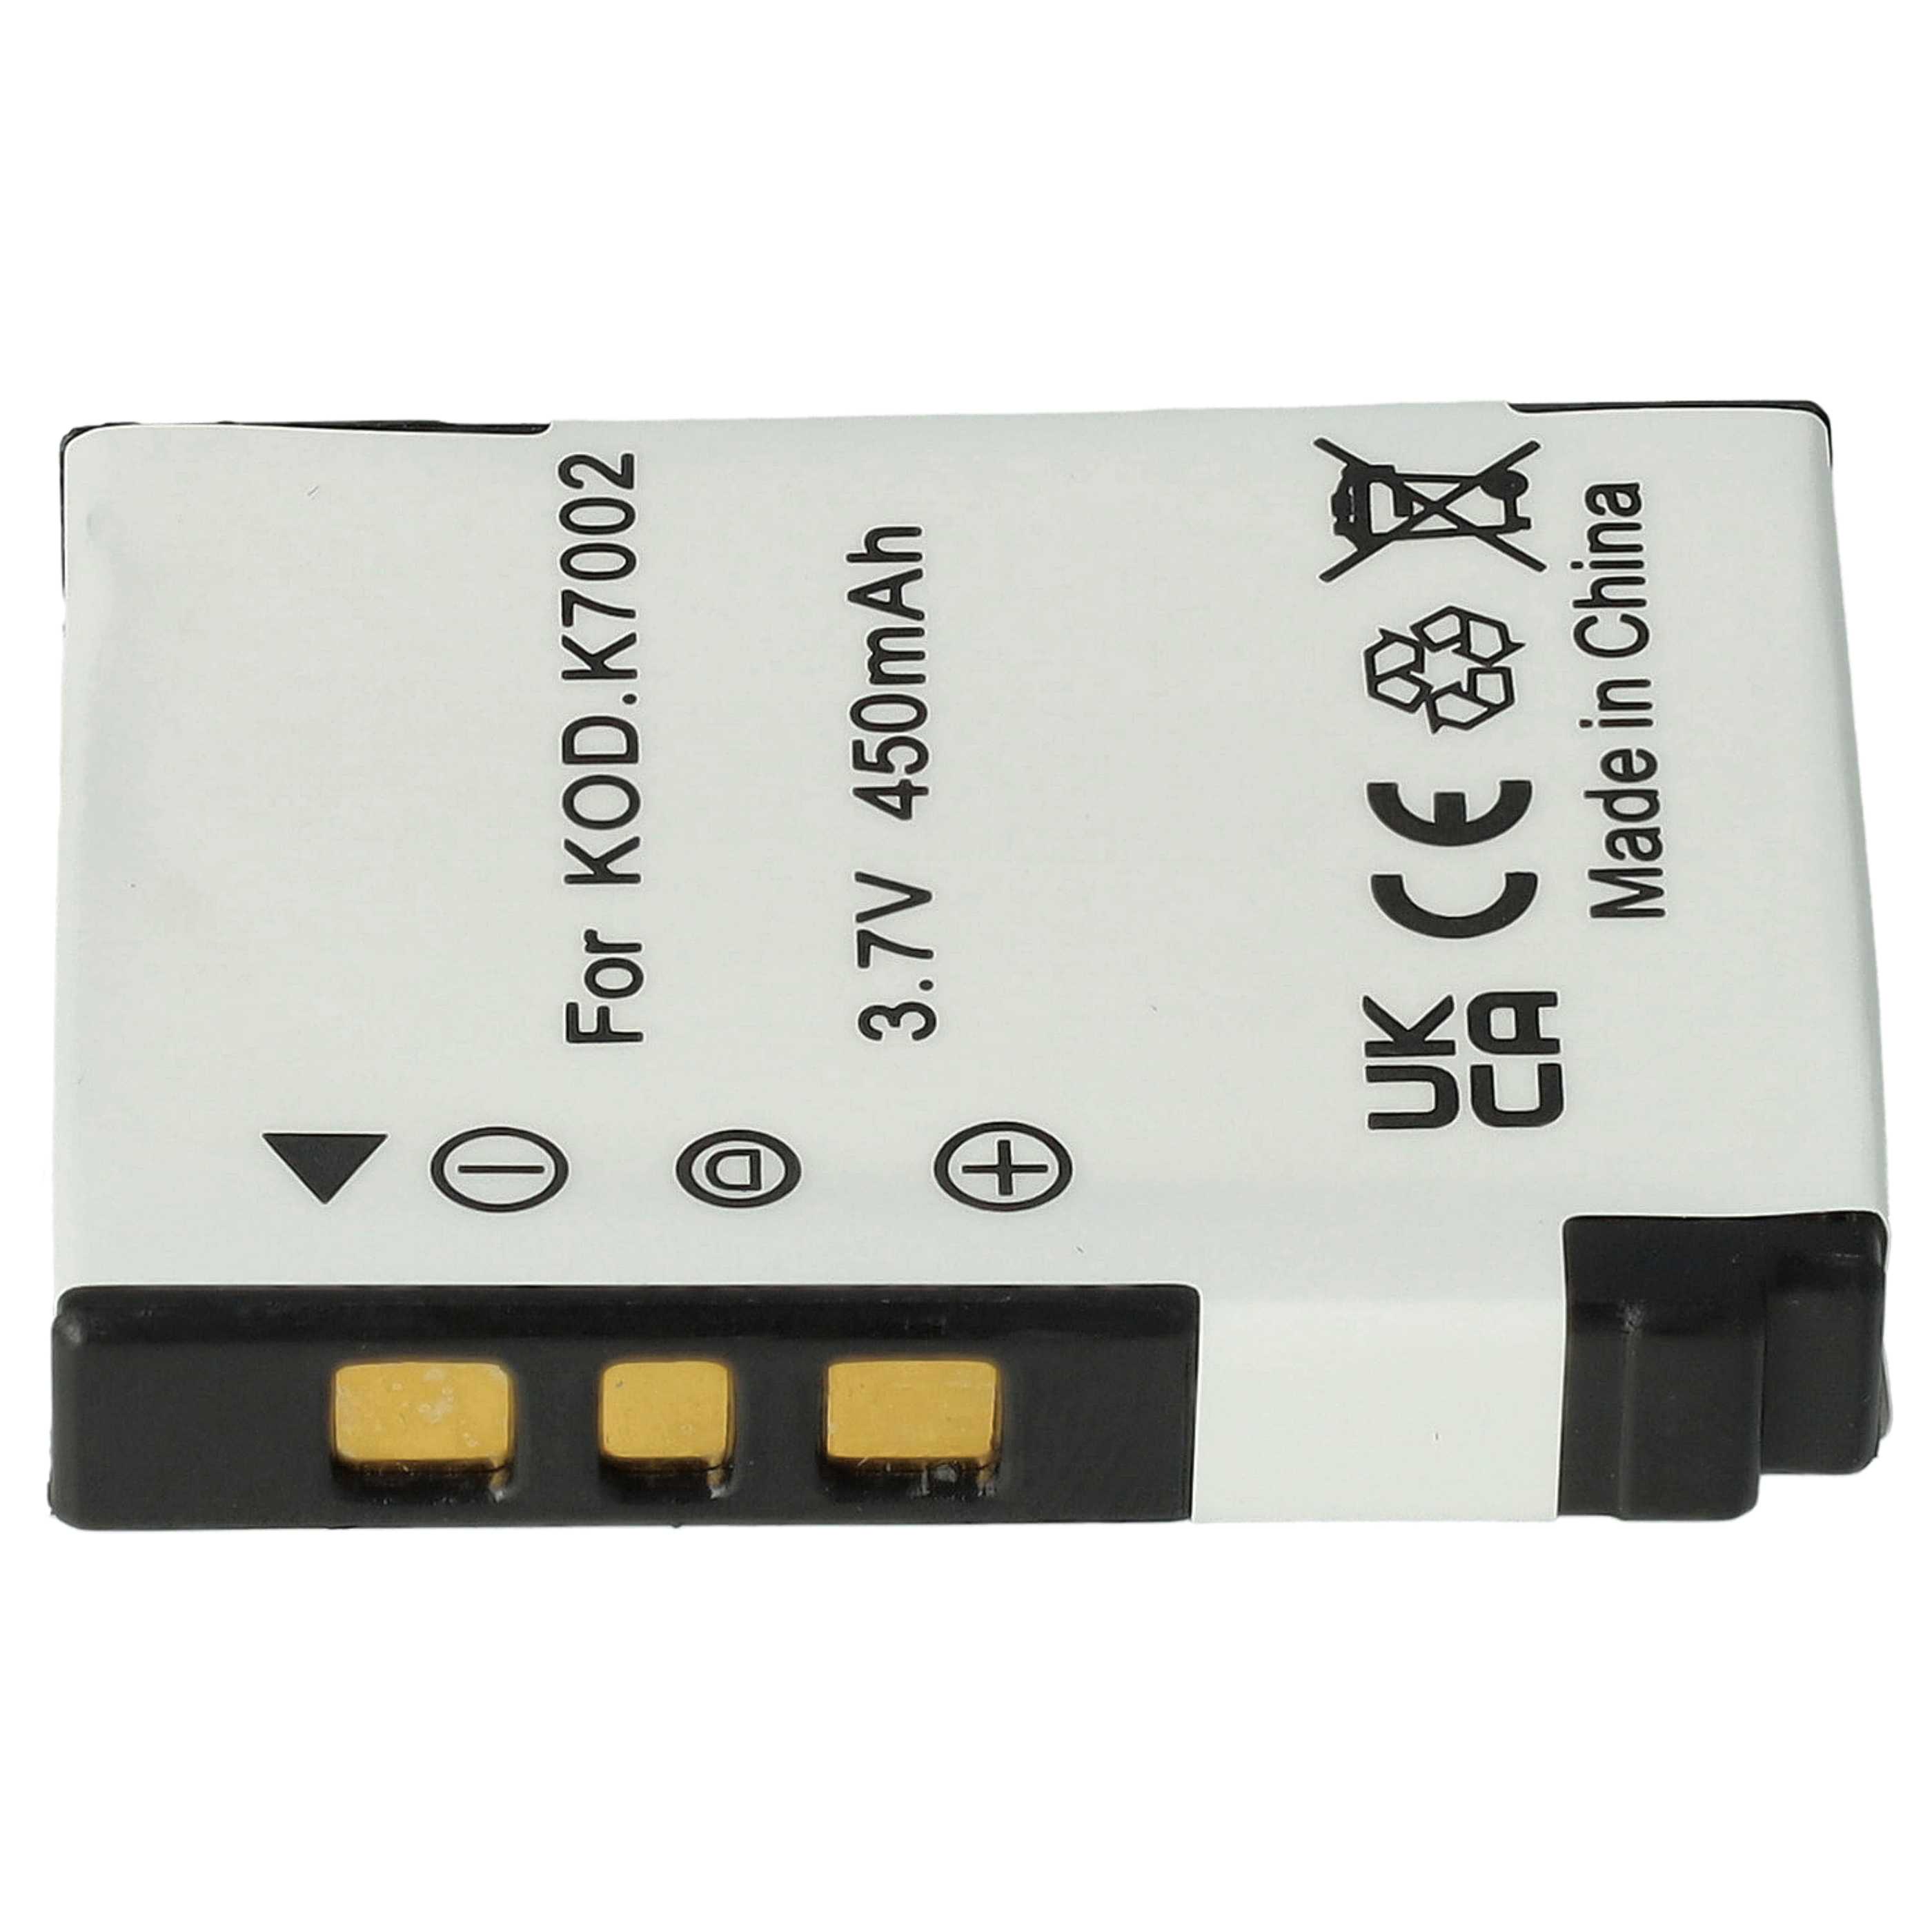 Akumulator do aparatu cyfrowego zamiennik Kodak Klic-7002 - 460 mAh 3,6 V Li-Ion